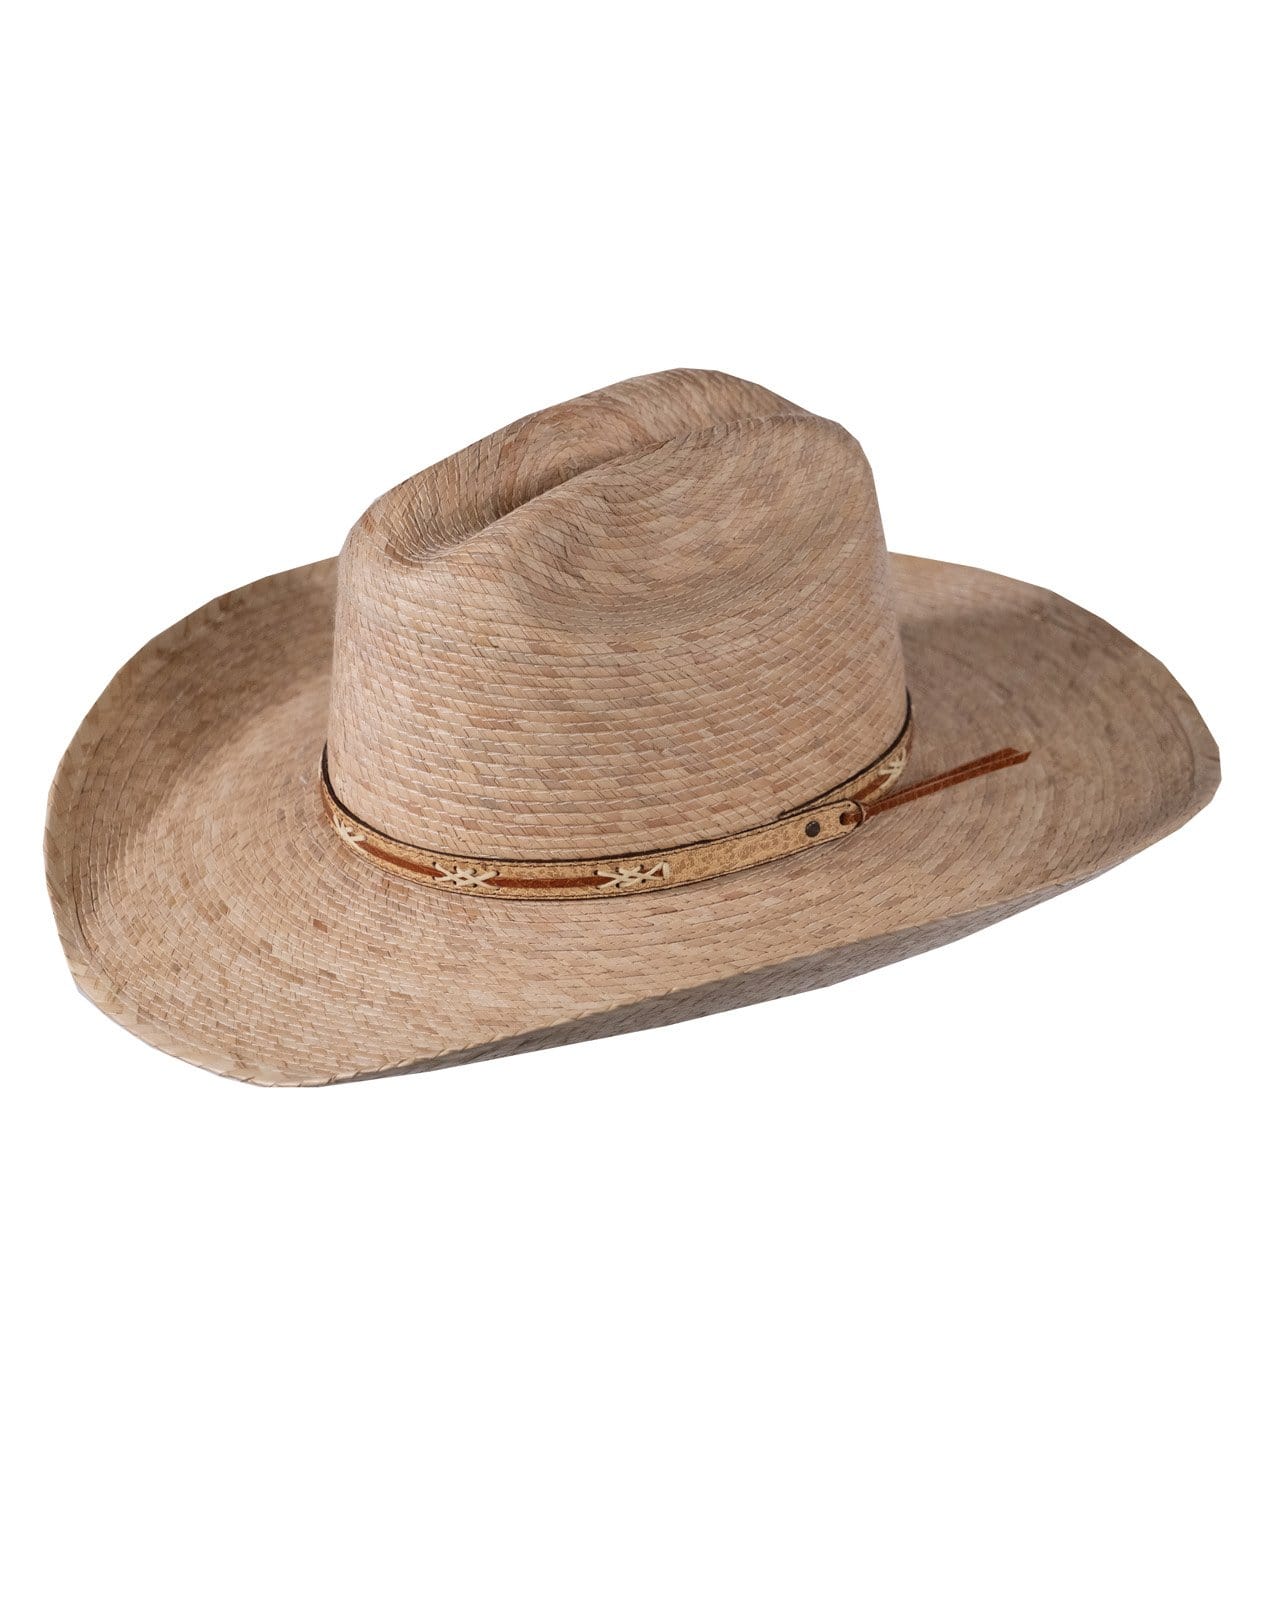 5 Best Hats for Sweaty Heads in 2023 – American Hat Makers